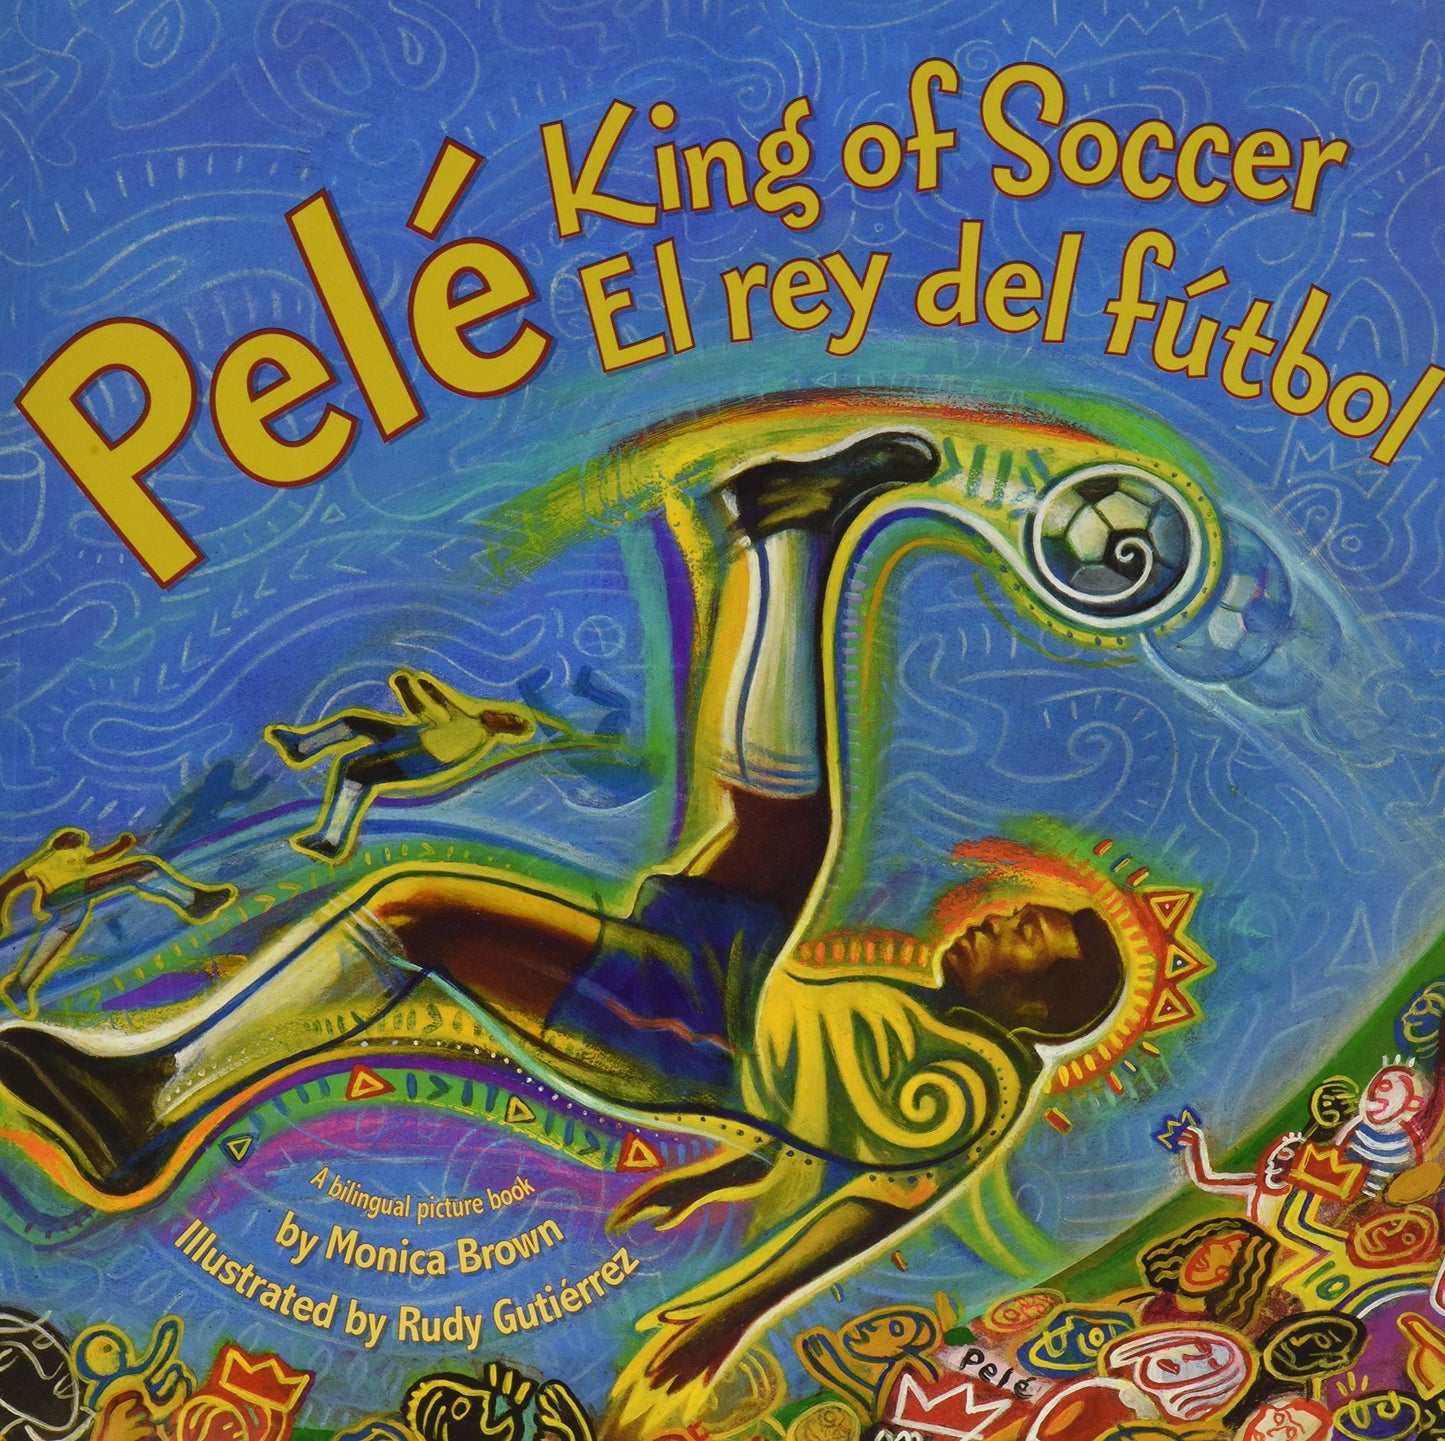 Pele, King of Soccer/Pele, El Rey del Futbol: Bilingual English-Spanish [Paperback] Brown, Monica and Gutierrez, Rudy